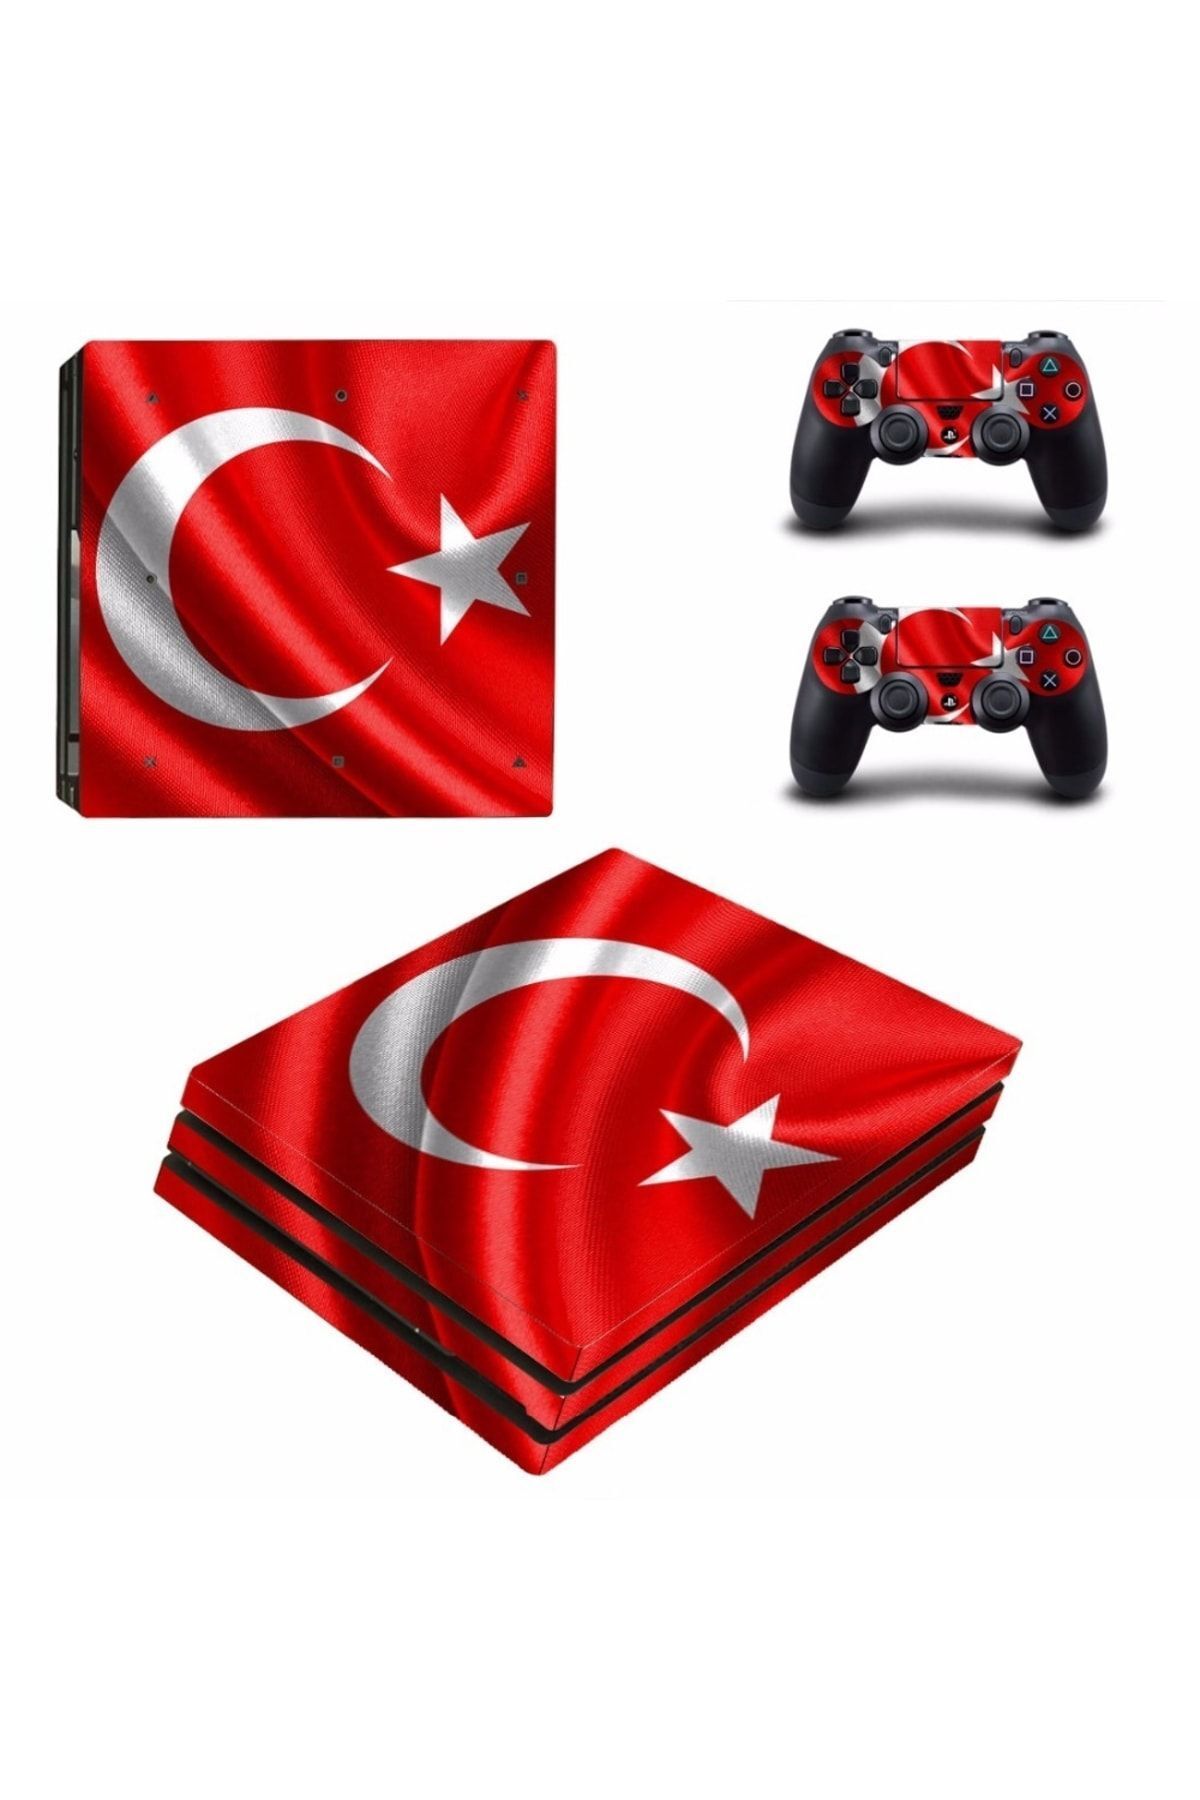 Kt Grup Dalgalı Türk Bayrağı Playstation 4 Pro Full Sticker Kaplama